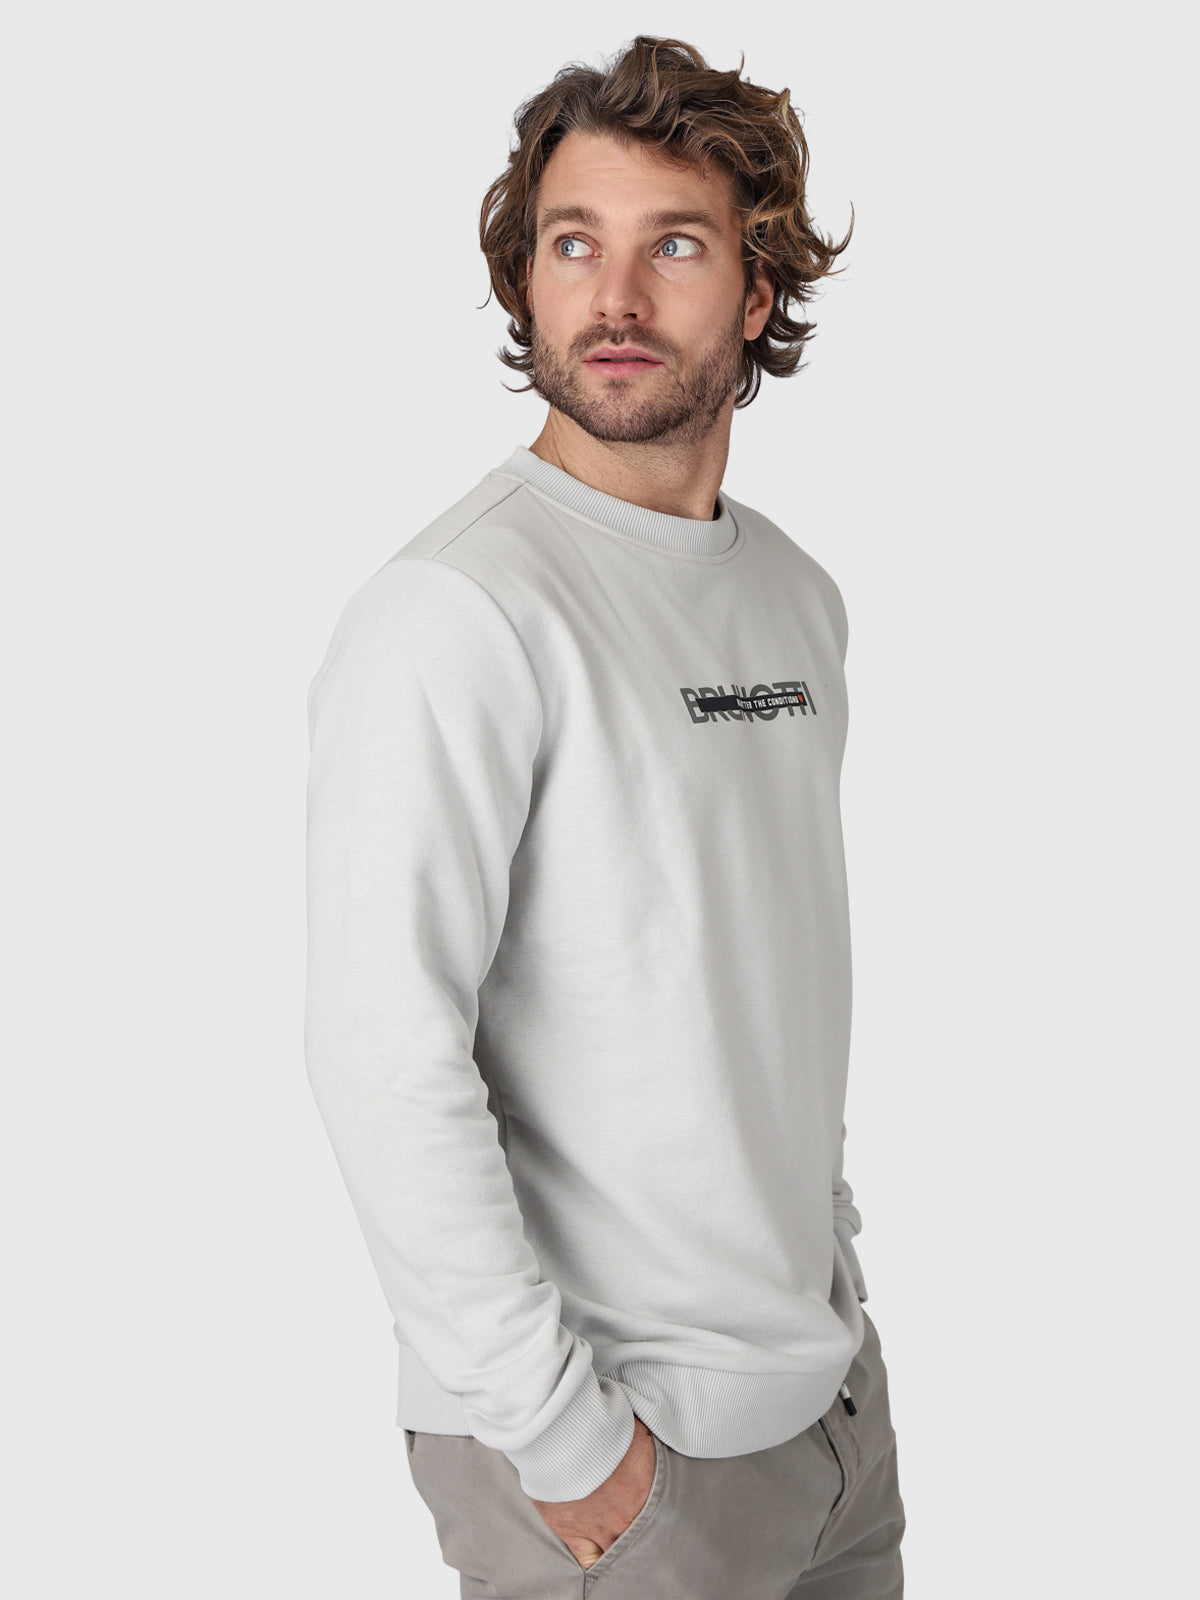 Rotcher Herren Sweatshirt | Grau